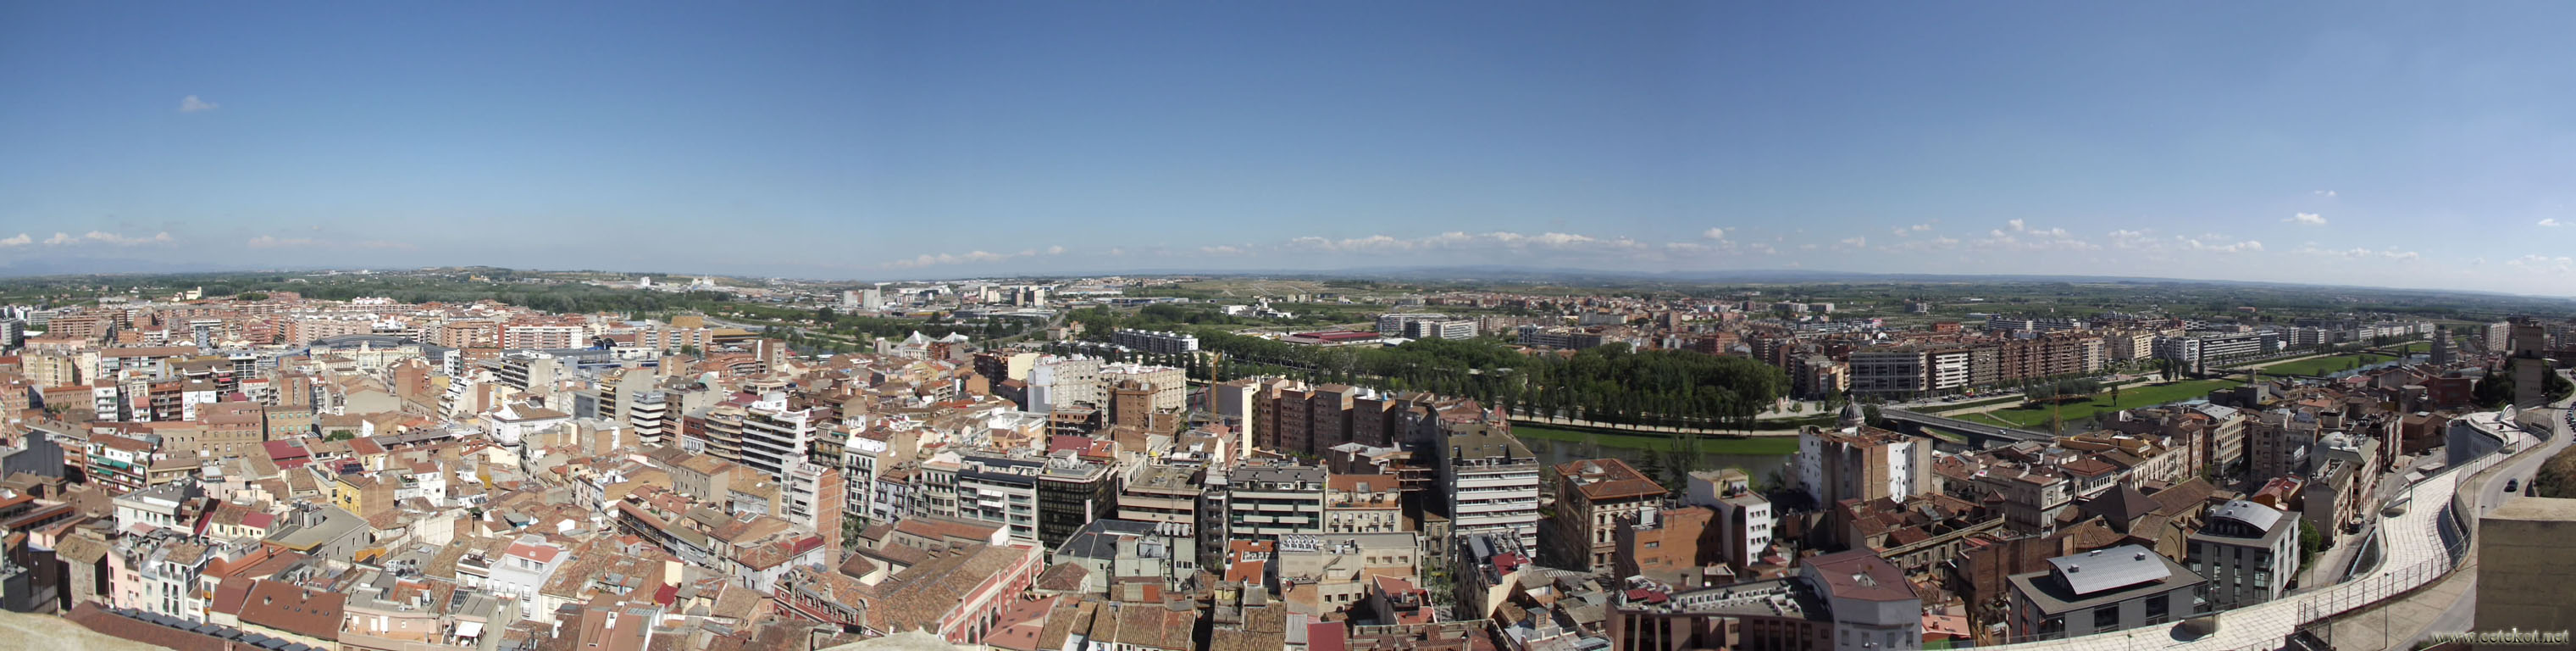 Льейда: панорама города.